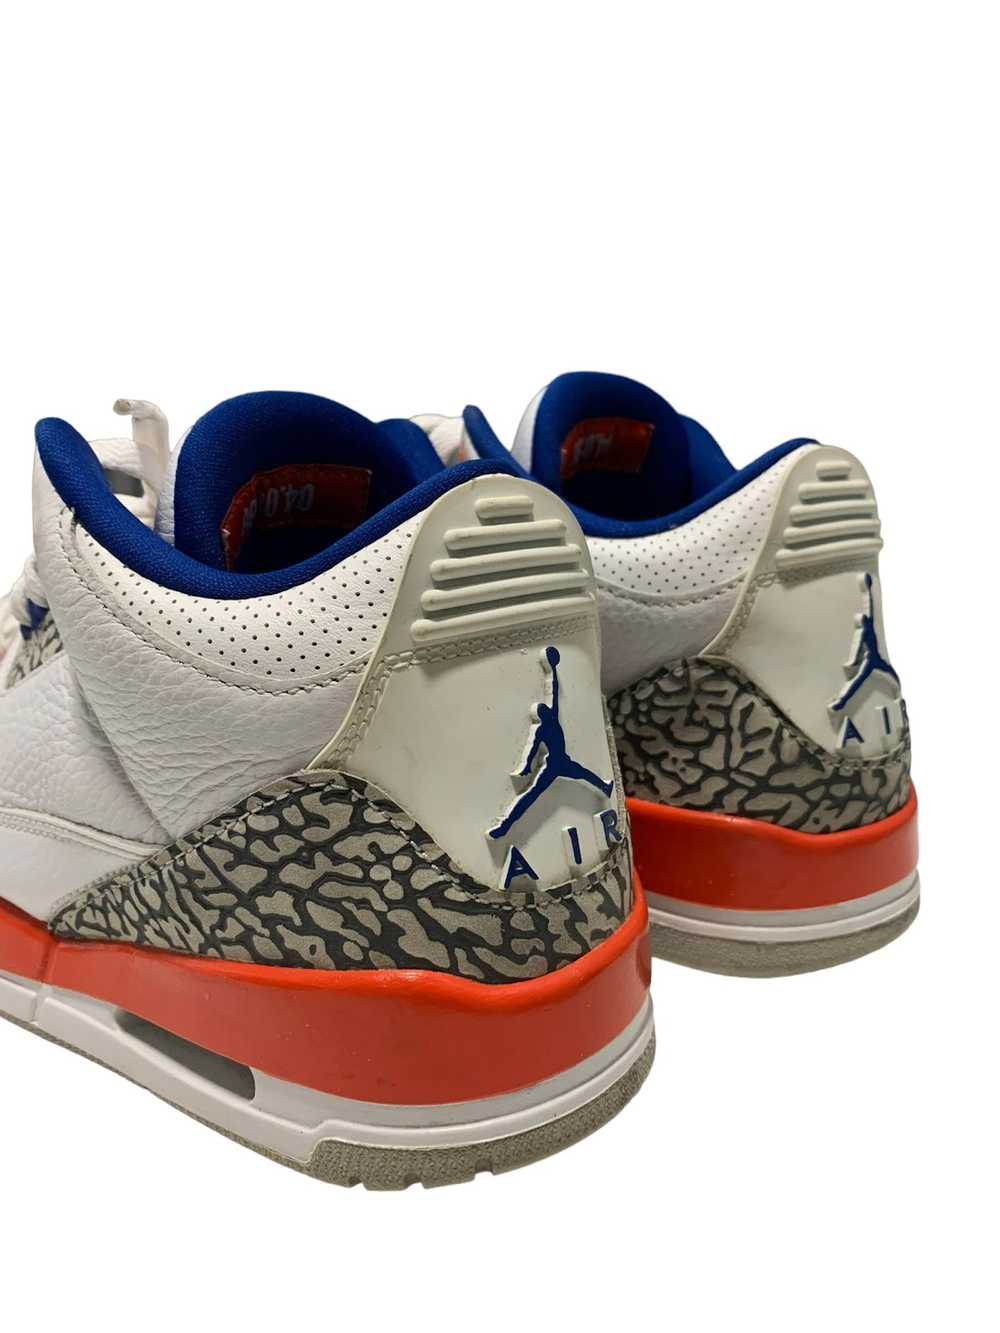 Jordan Brand Air Jordan 3 Retro 'Knicks' - image 7